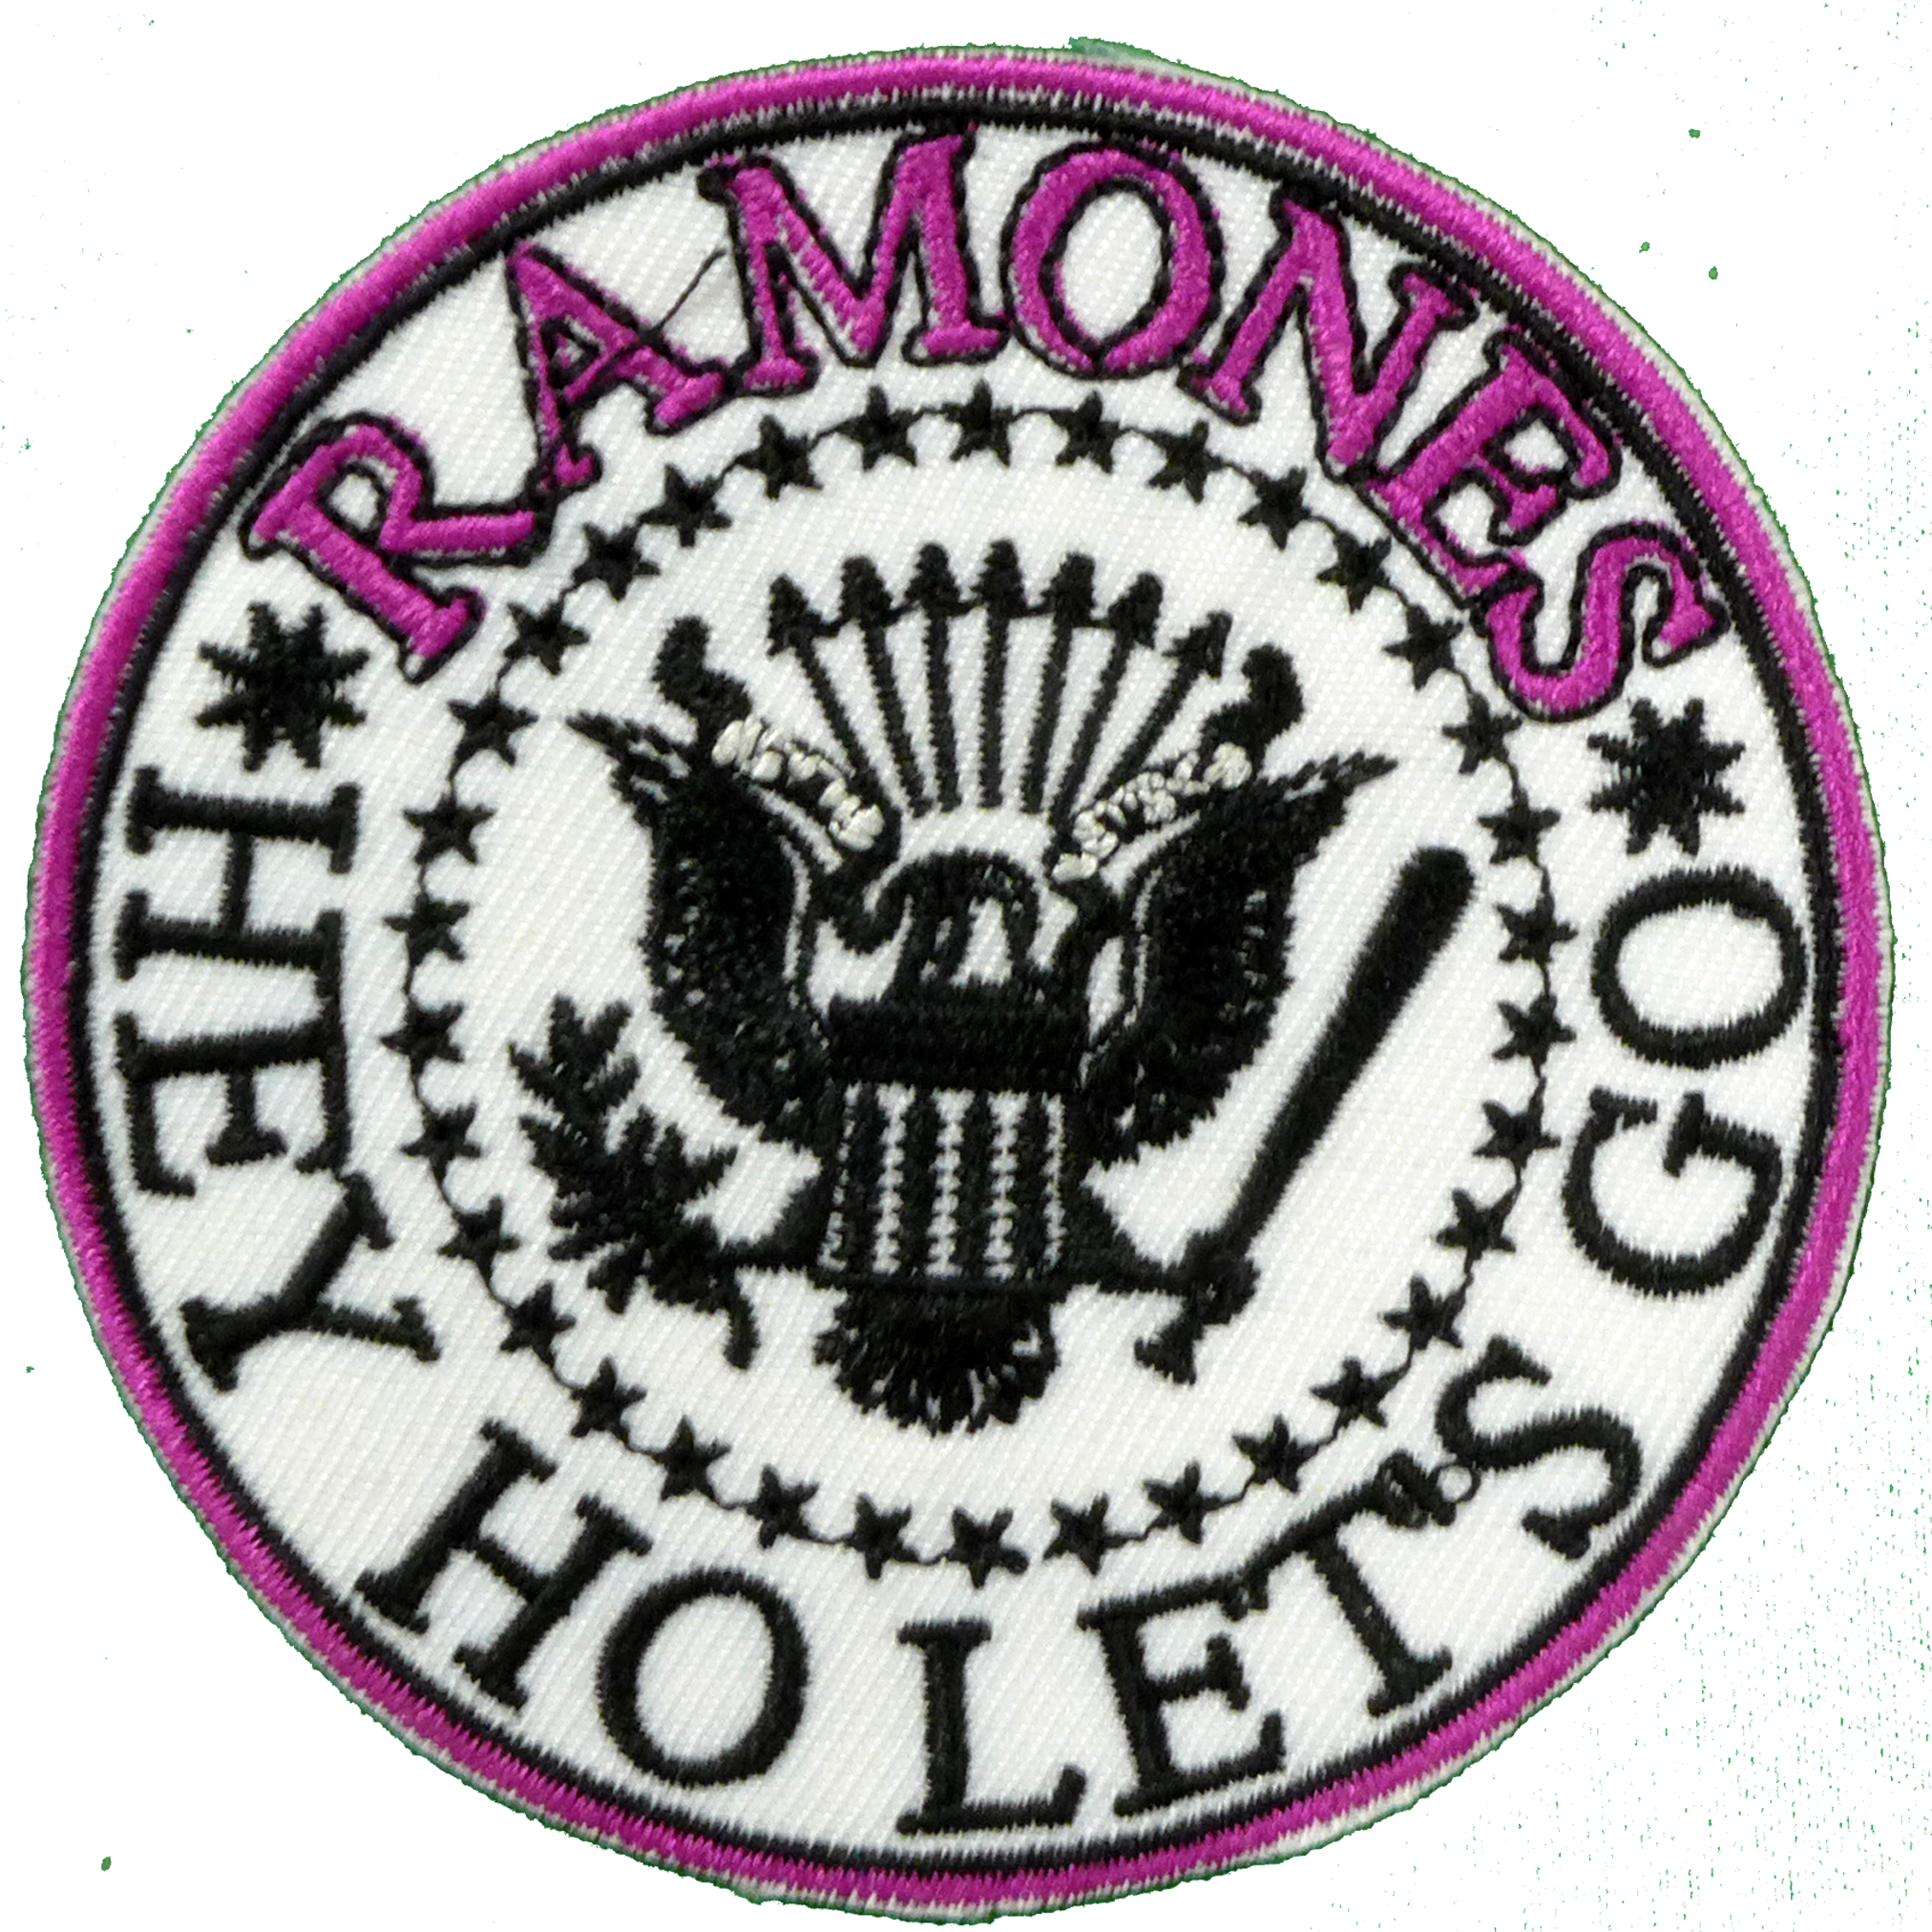 the ramones logo png